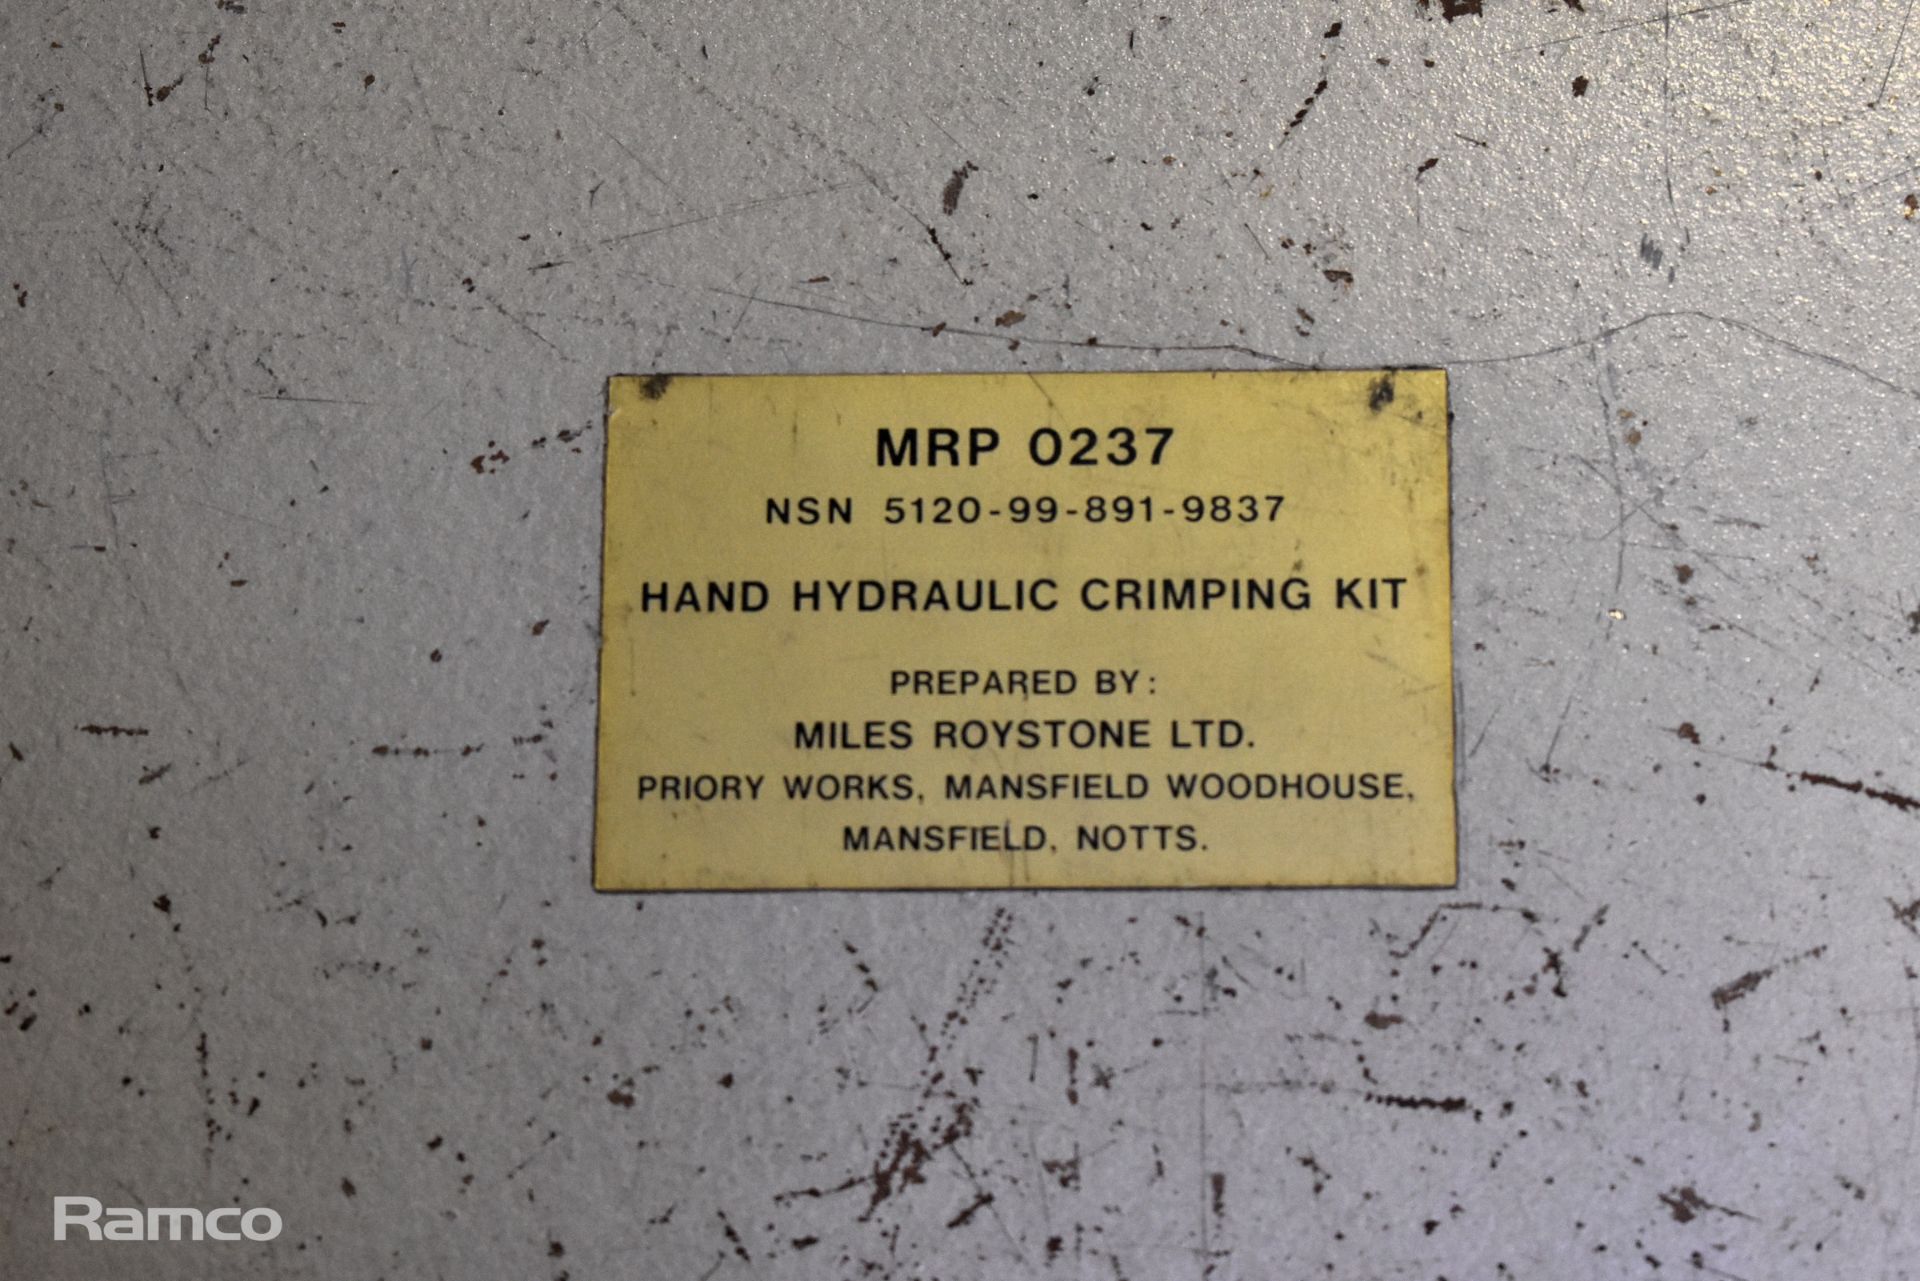 2x Glenair MRP0237 hand hydraulic crimping tool kits - 1 kit incomplete - Image 11 of 12